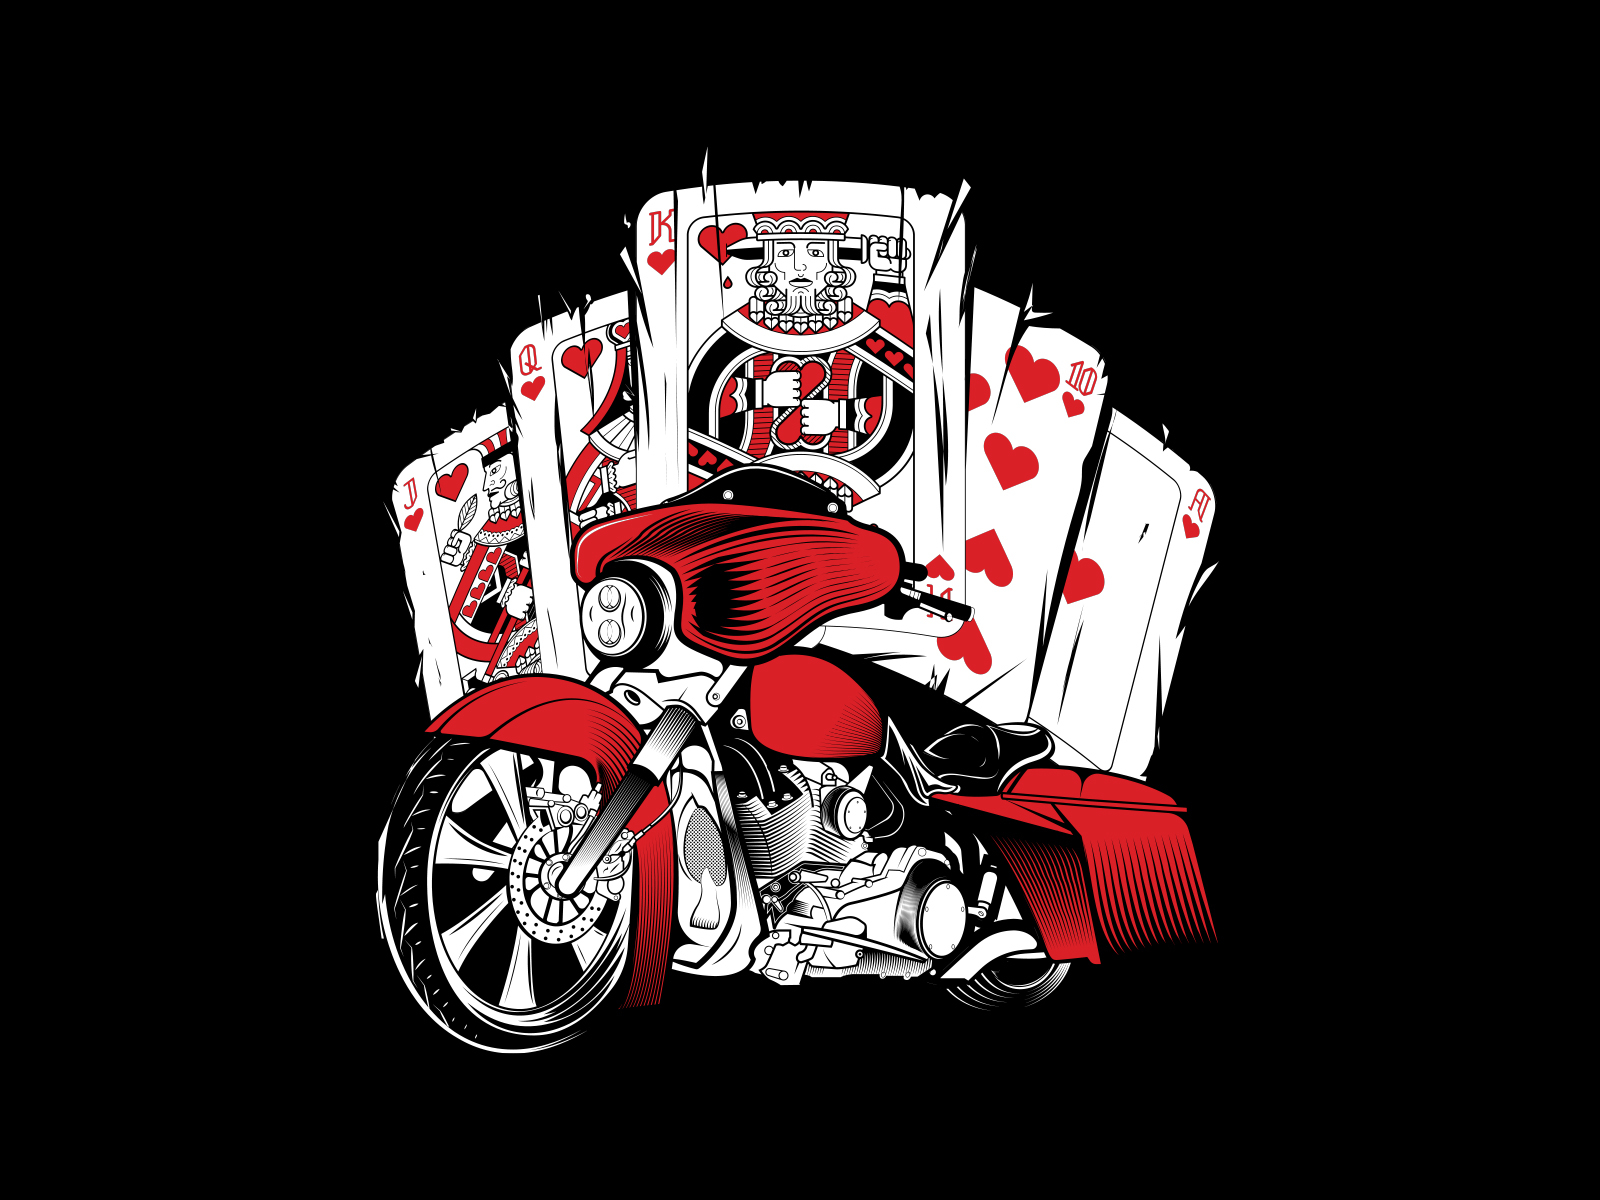 poker-run-by-cohen-mcdonald-on-dribbble